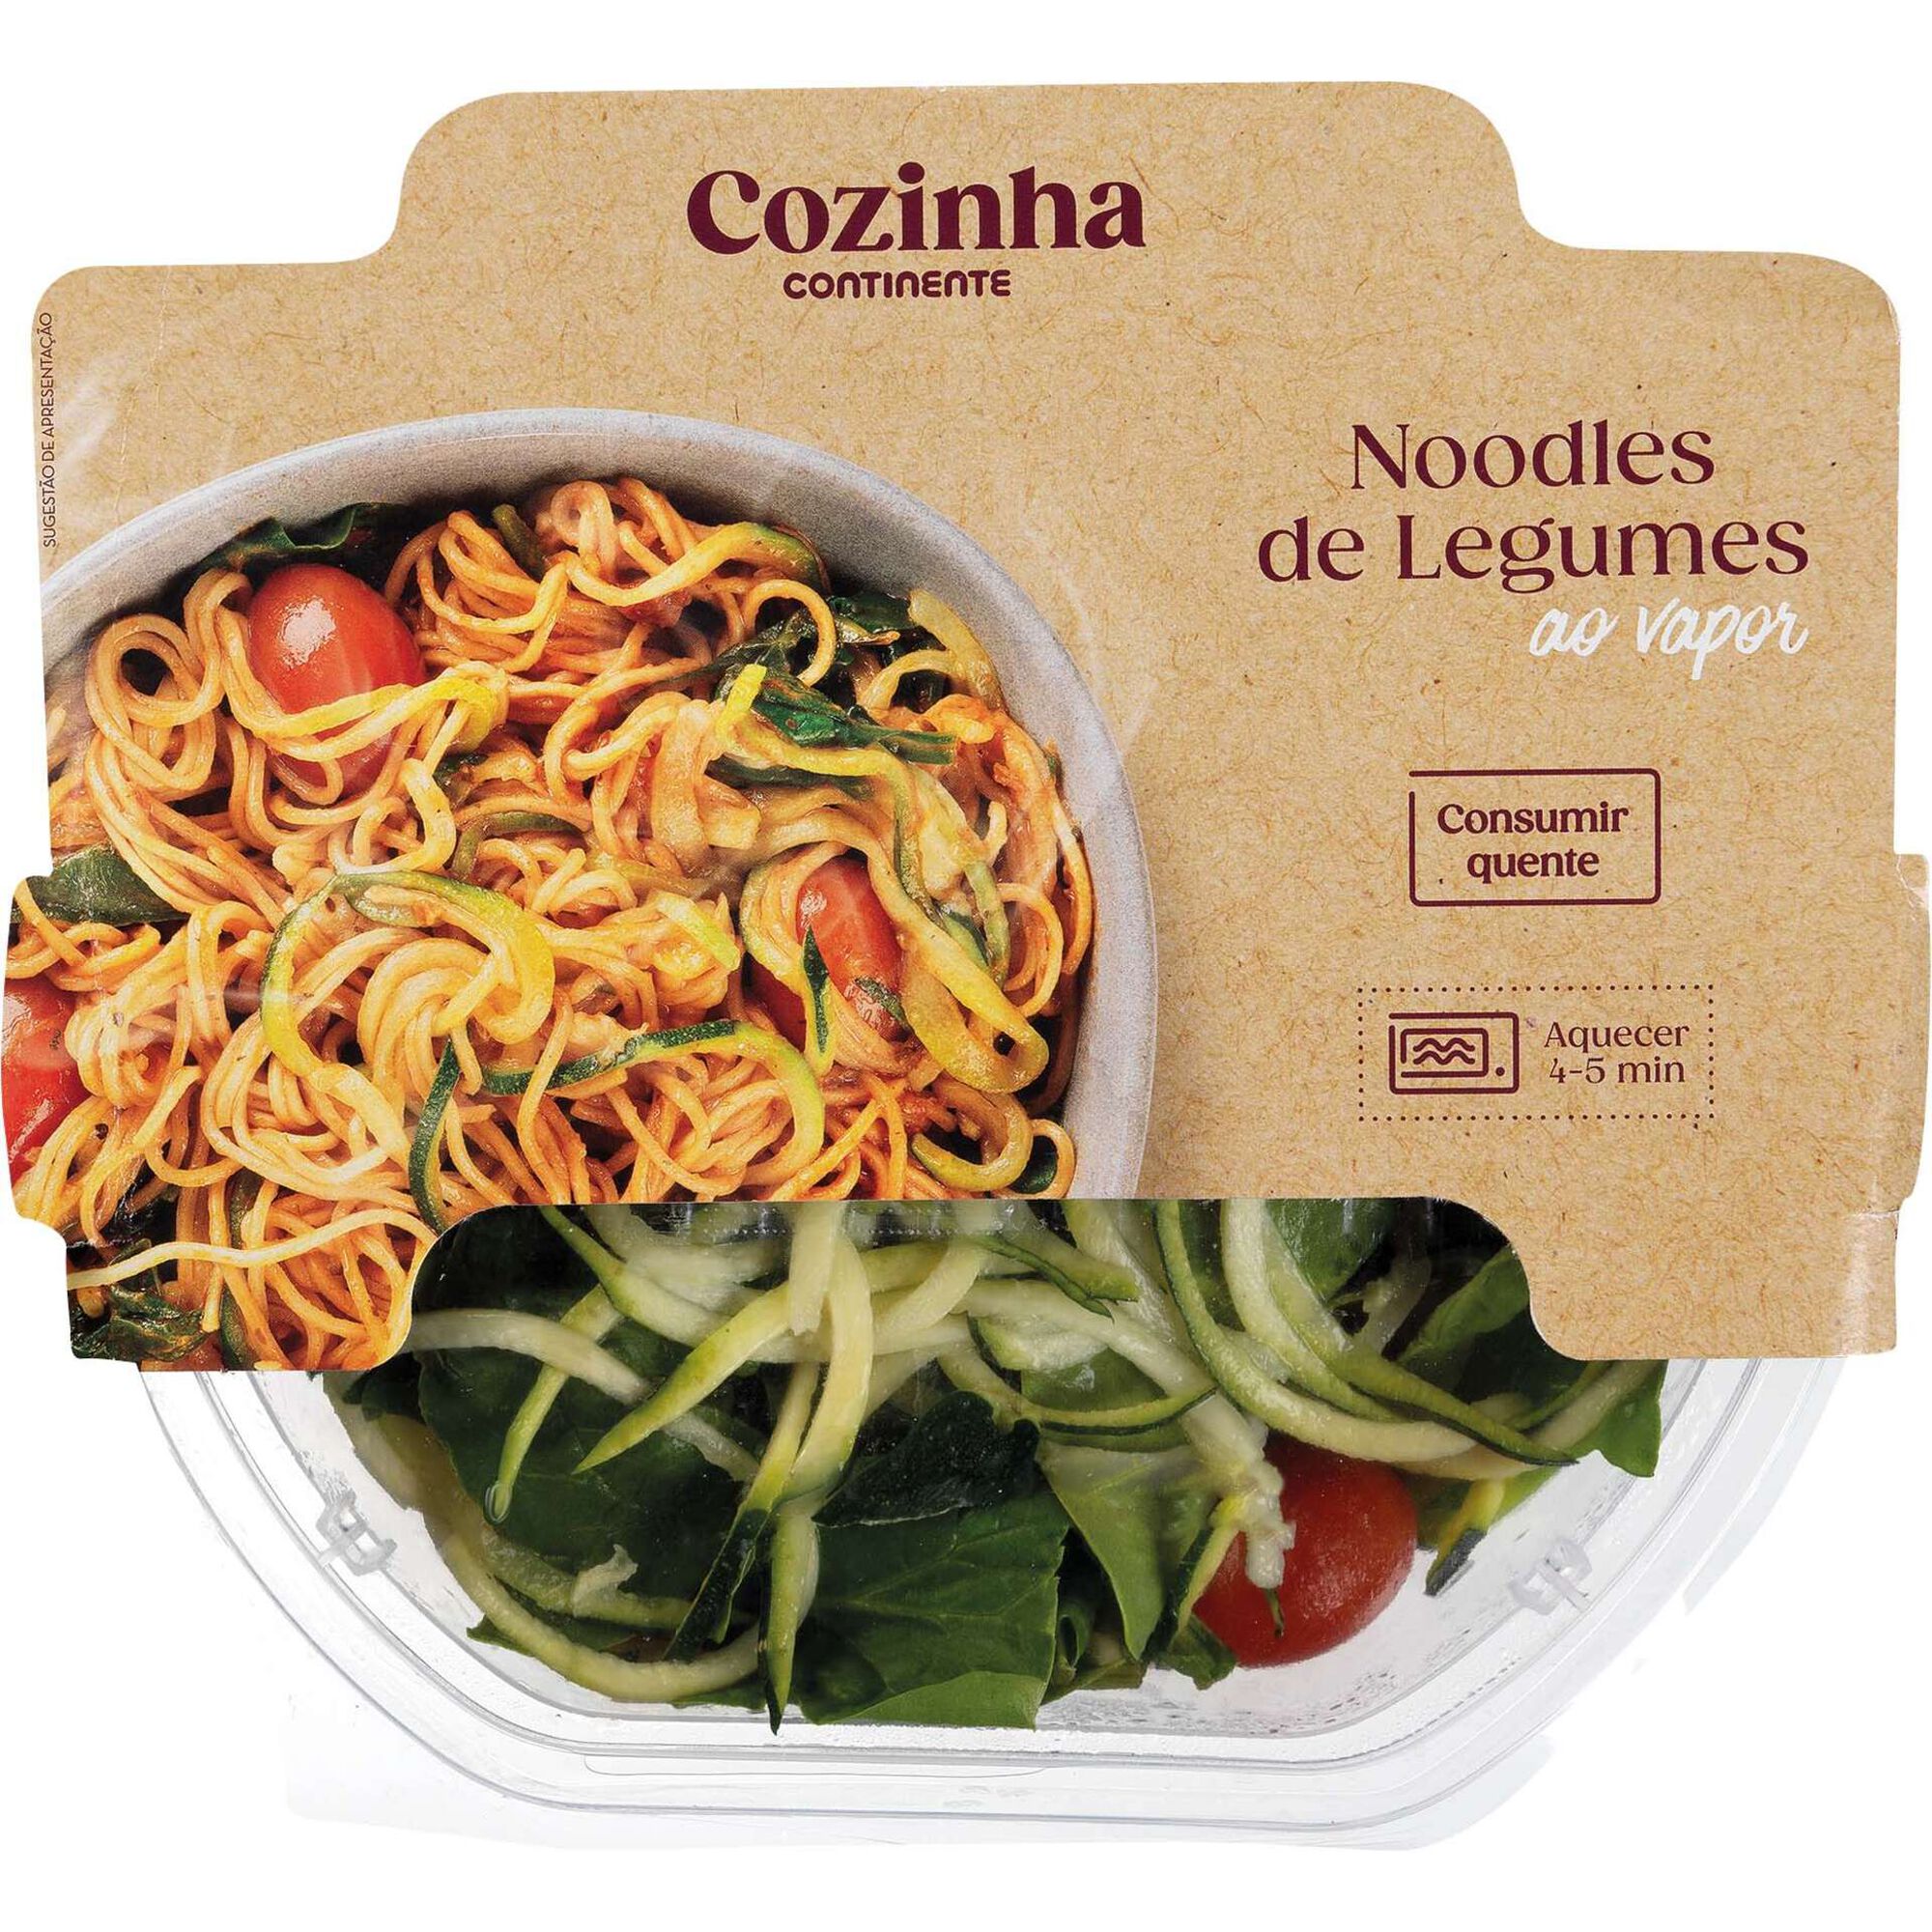 Noodles de Legumes ao Vapor